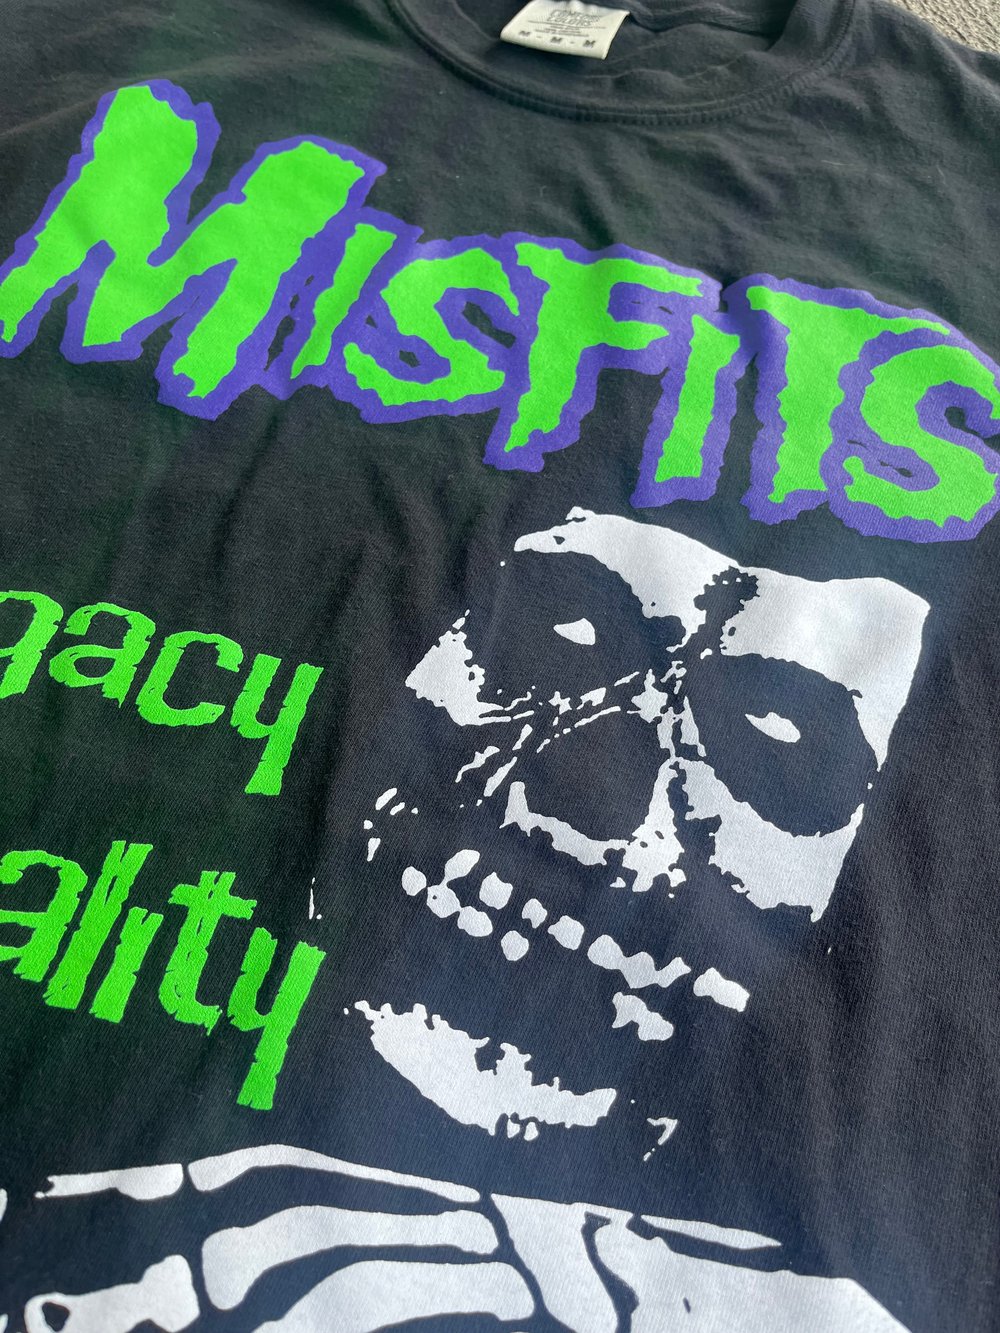 MISFITS 'Legacy Of Brutality' T-Shirt (Green/Purple)